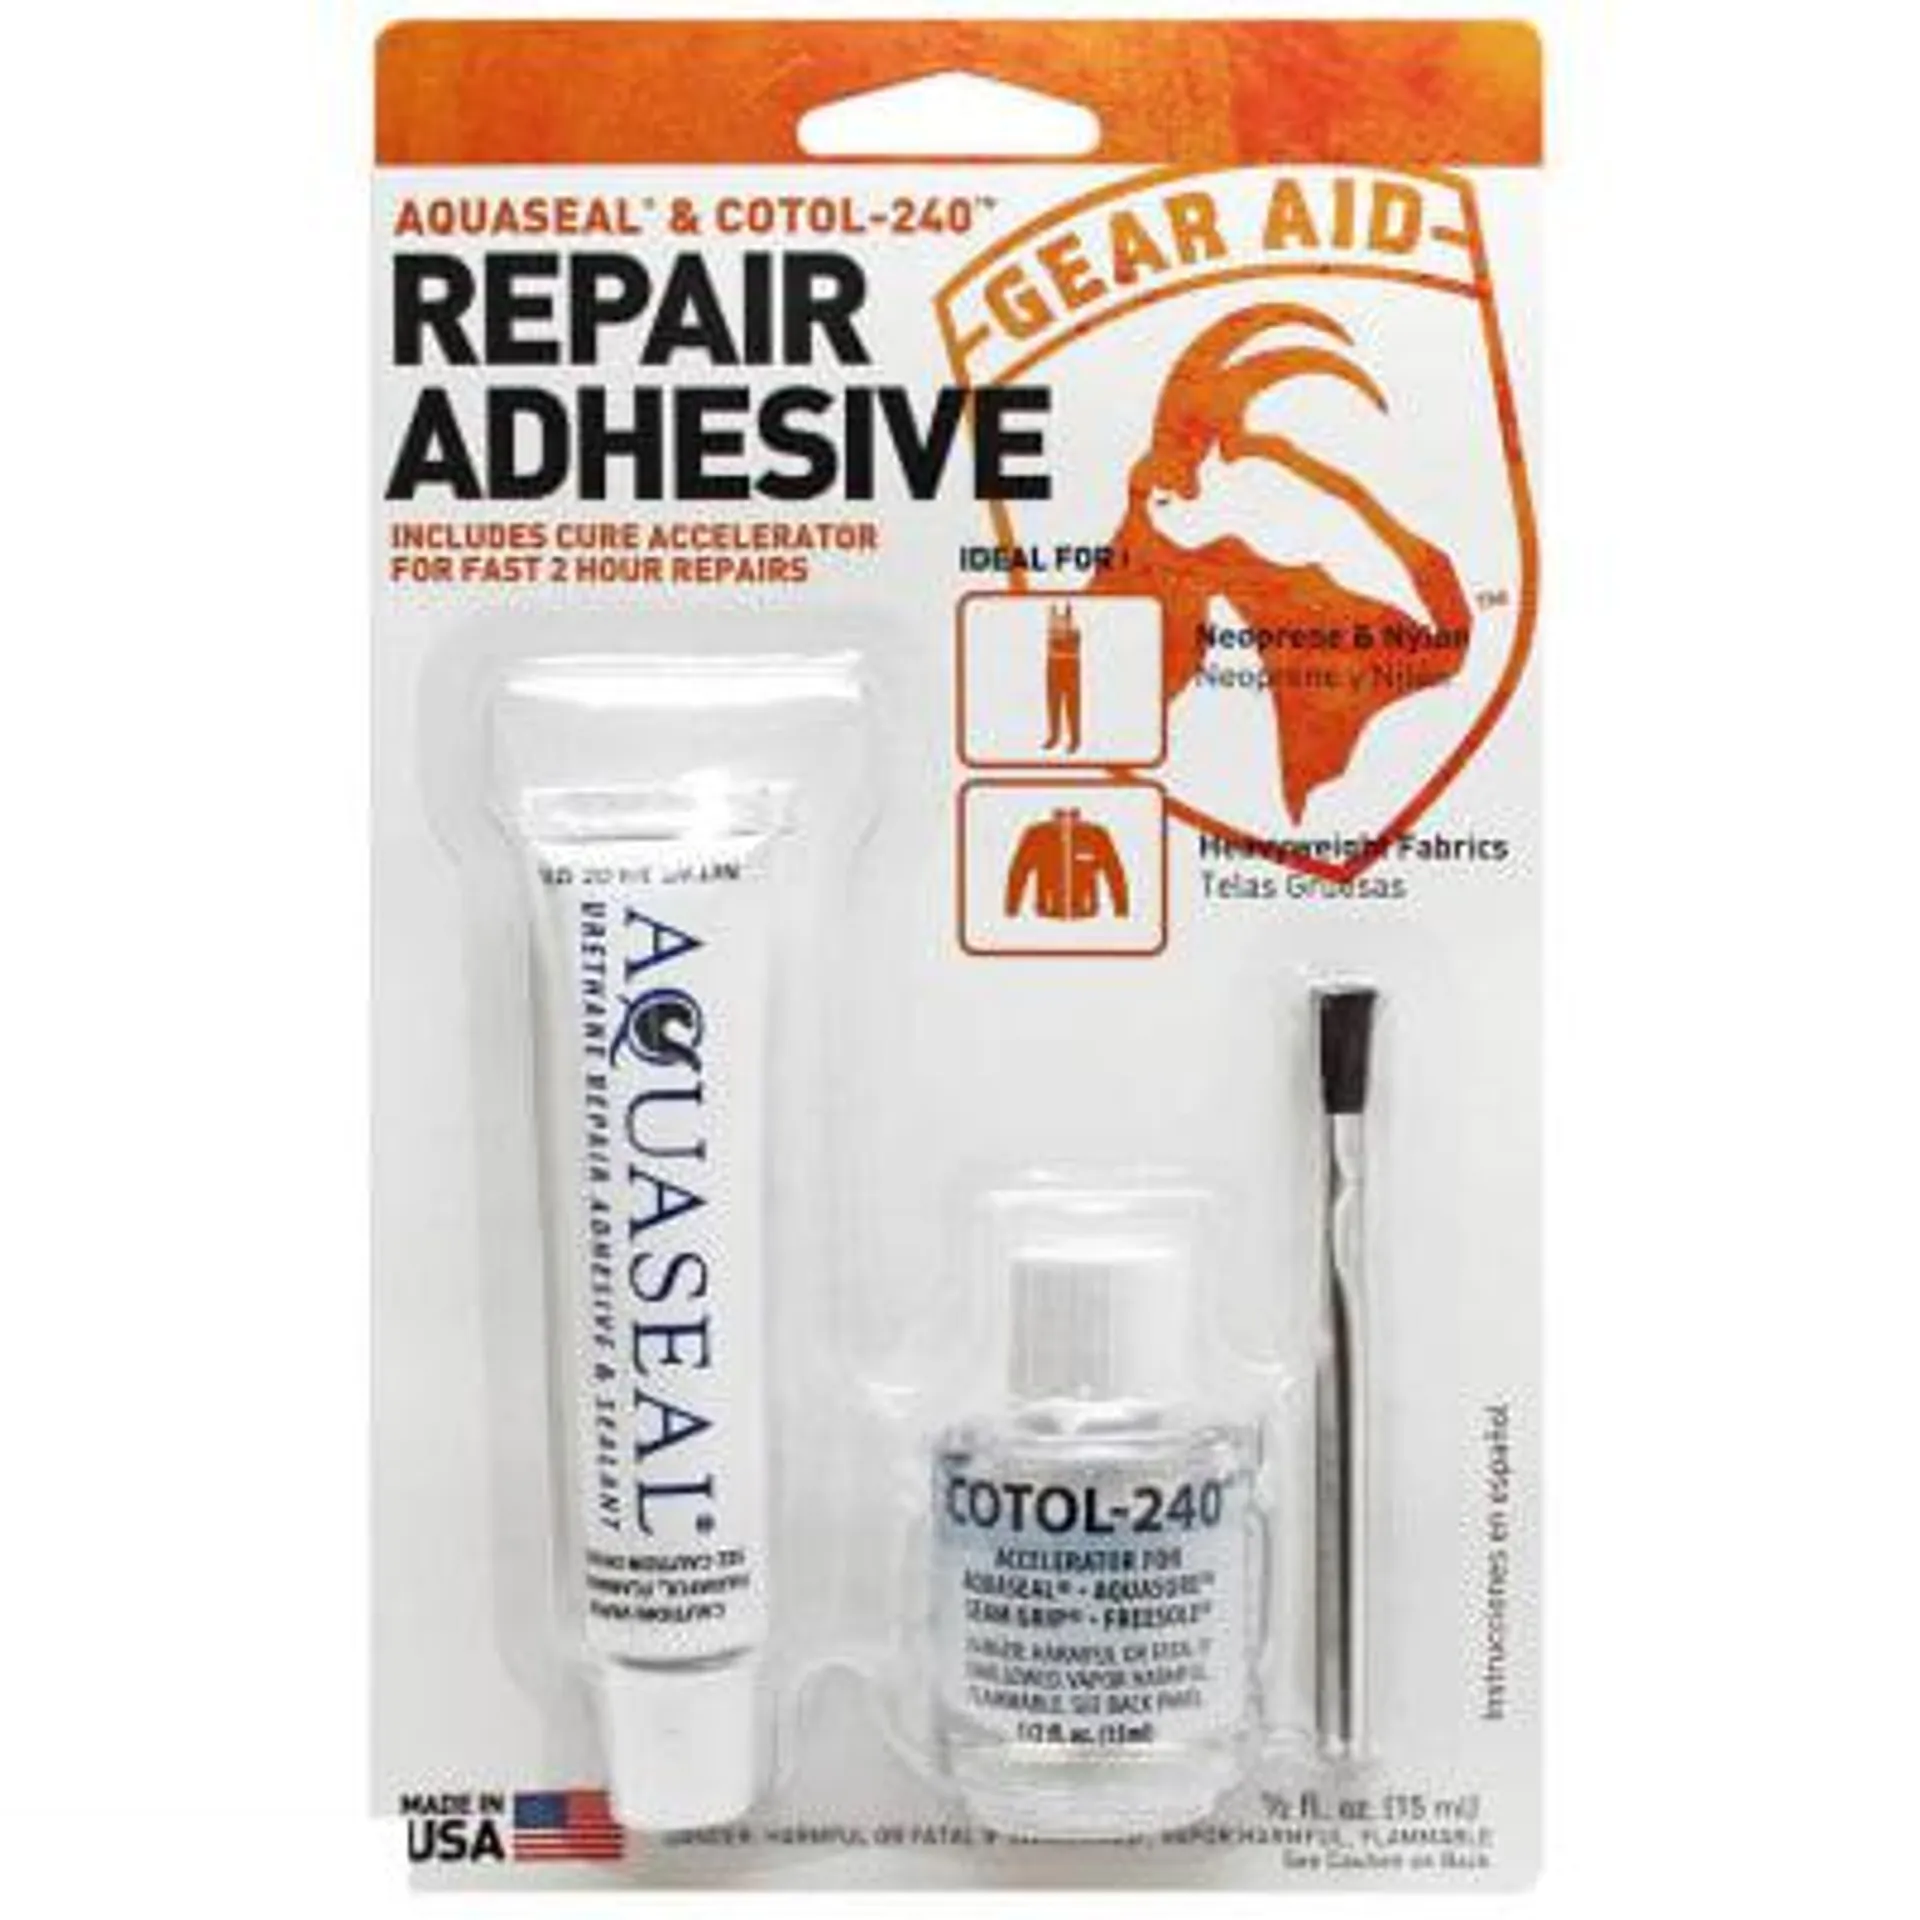 Aquaseal Urethane Repair Adhesive & Sealant with Cotol